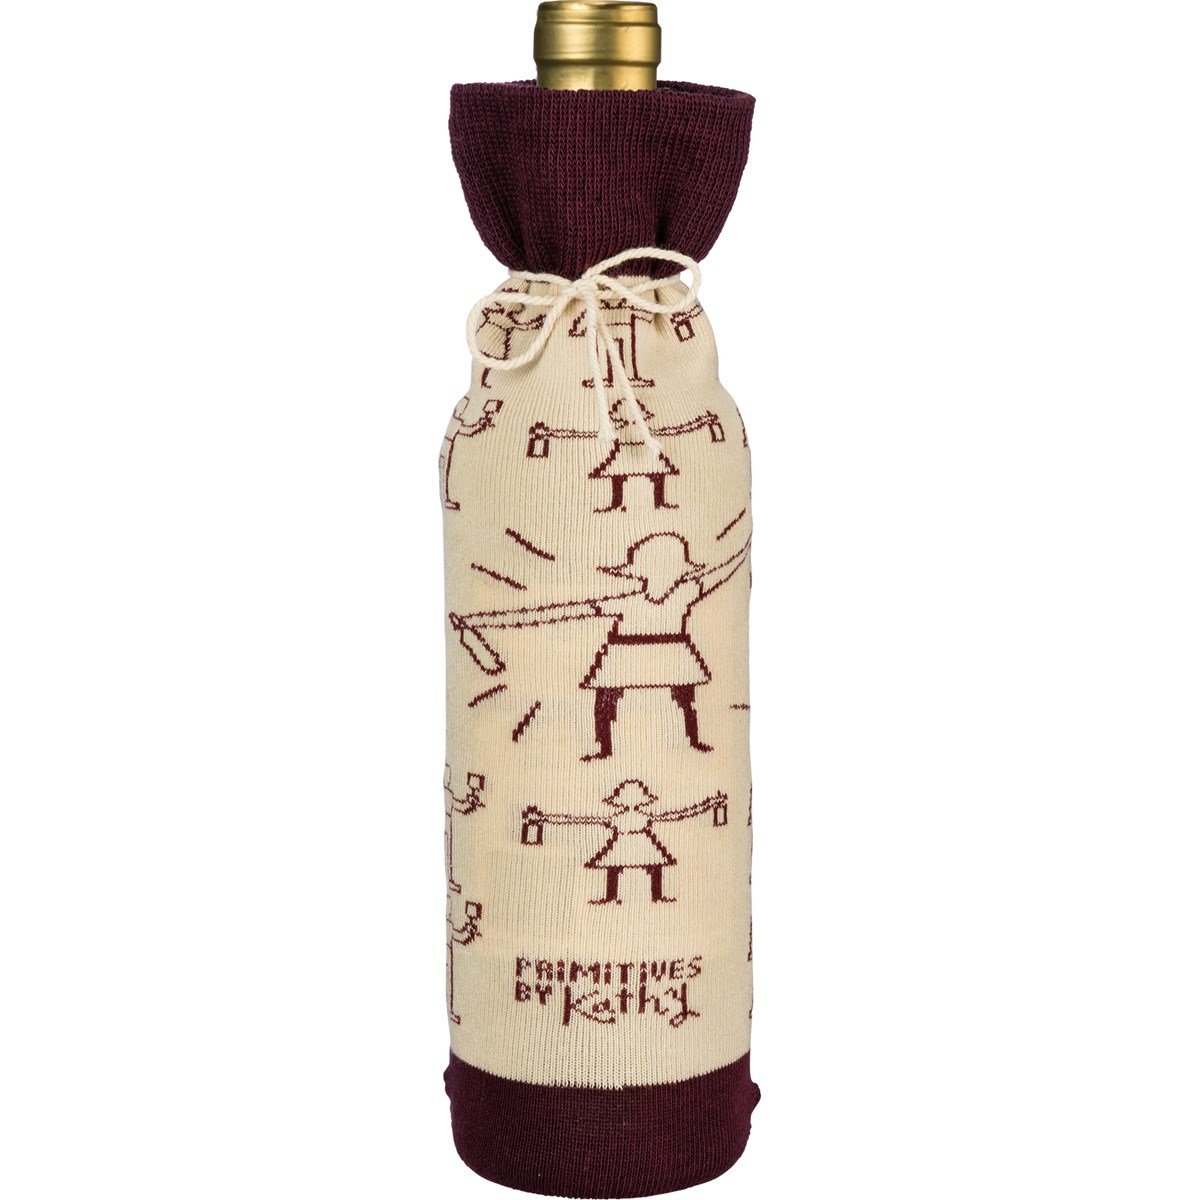 Bottle Sock - Don't Let Friends Wine Alone - 3.50" x 11.25", Fits 750mL to 1.5L bottles - Cotton, Nylon, Spandex